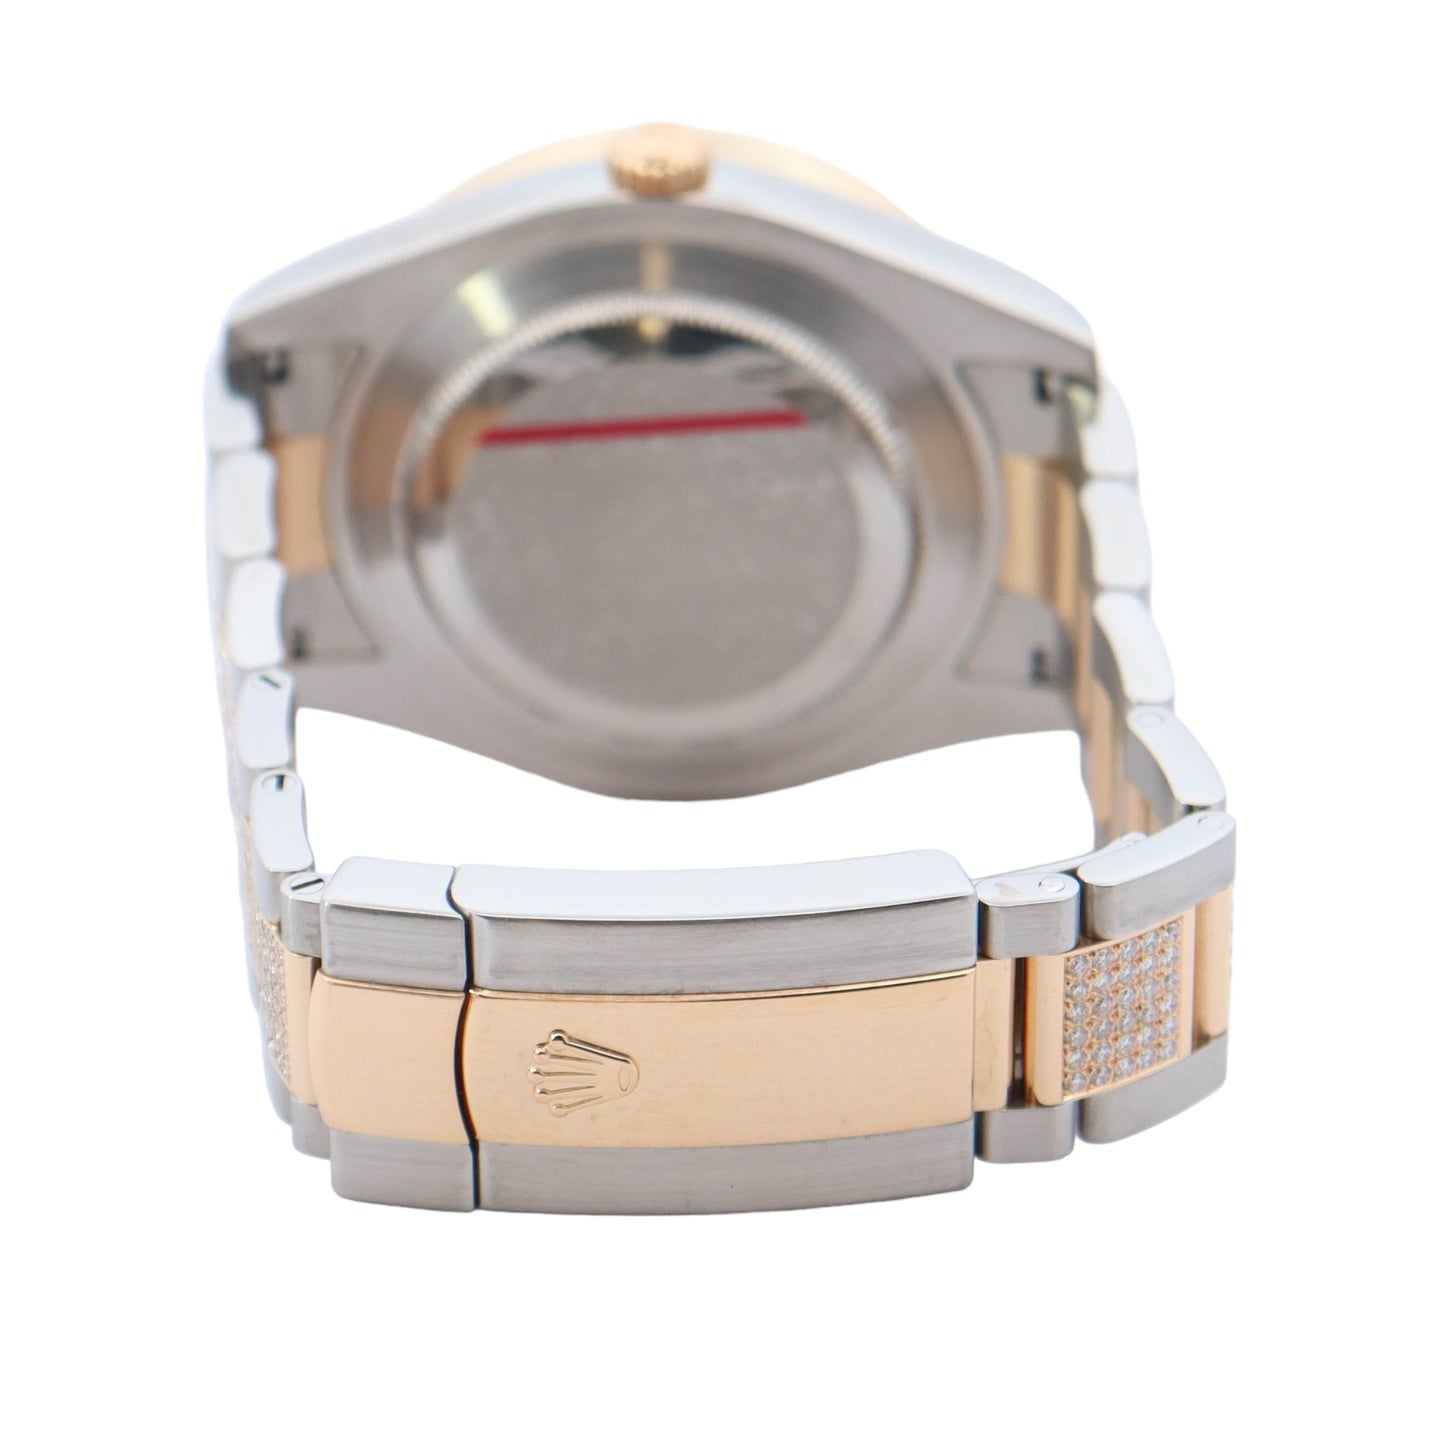 Rolex Datejust Two Tone Yellow Gold & Steel 41mm Blue Diamond Roman Dial Watch Reference #: 116333 - Happy Jewelers Fine Jewelry Lifetime Warranty